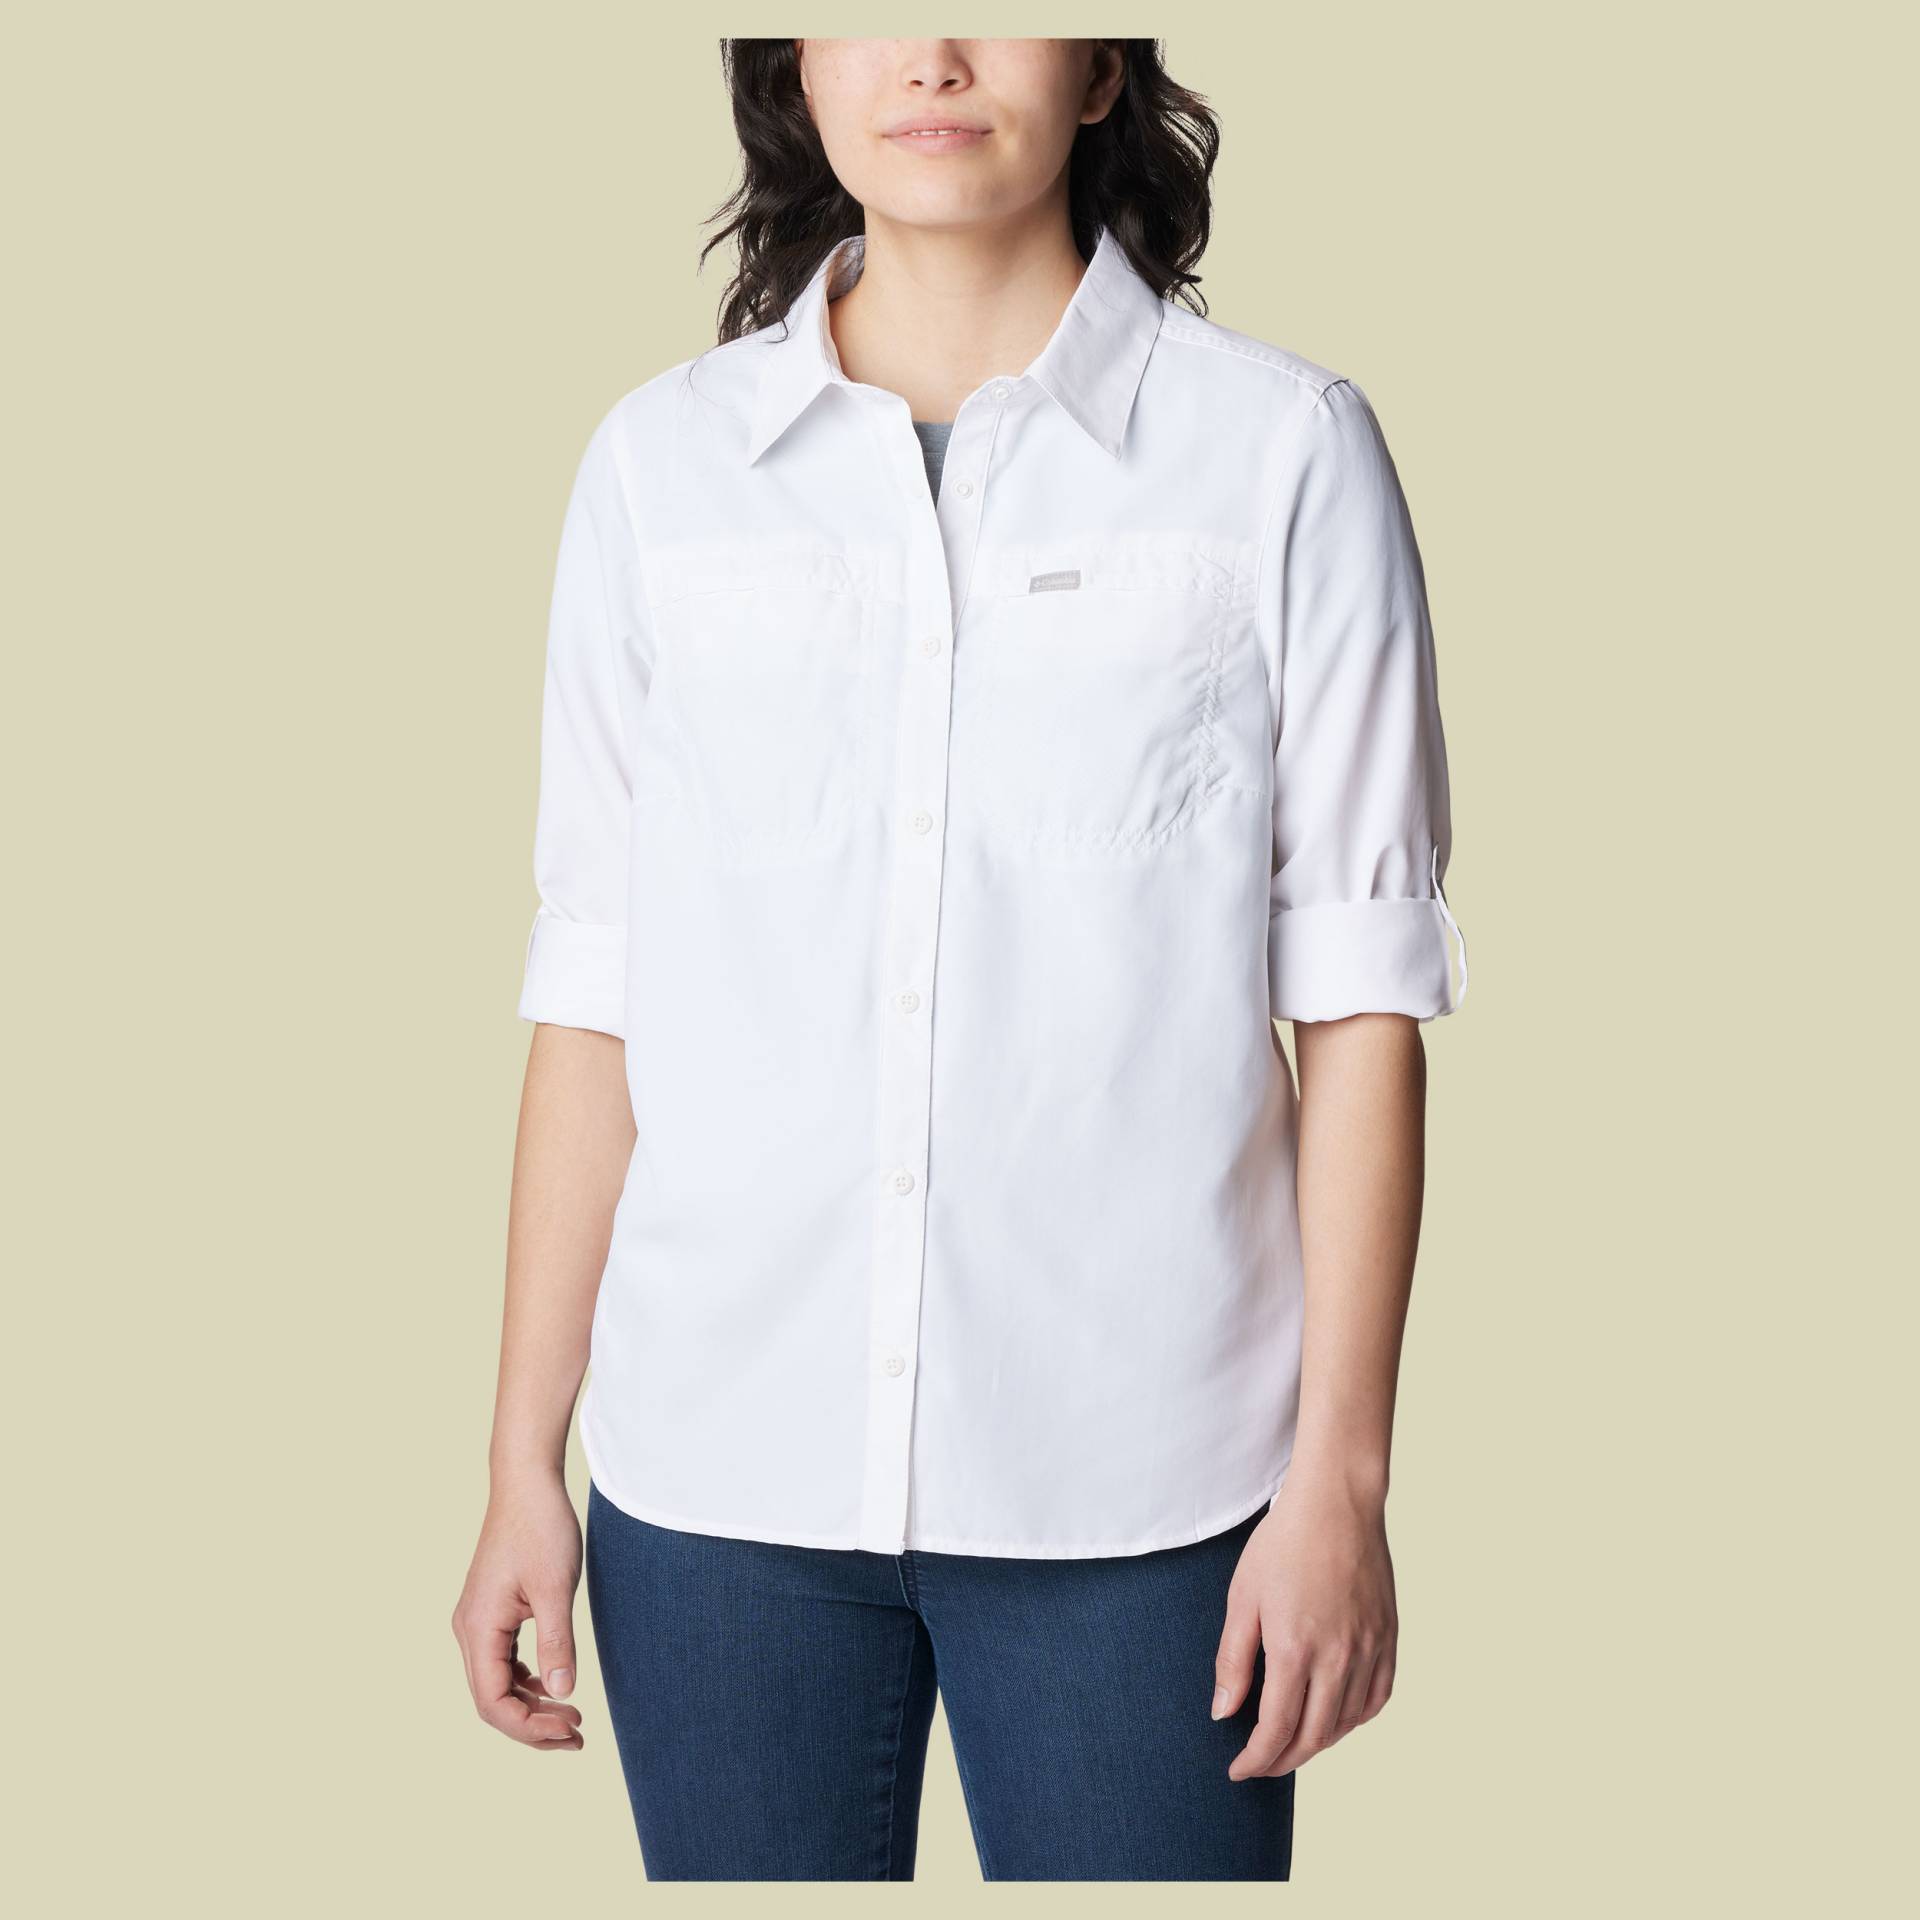 Silver Ridge 3.0 EUR Long Sleeve Shirt Women Größe XL Farbe white von Columbia